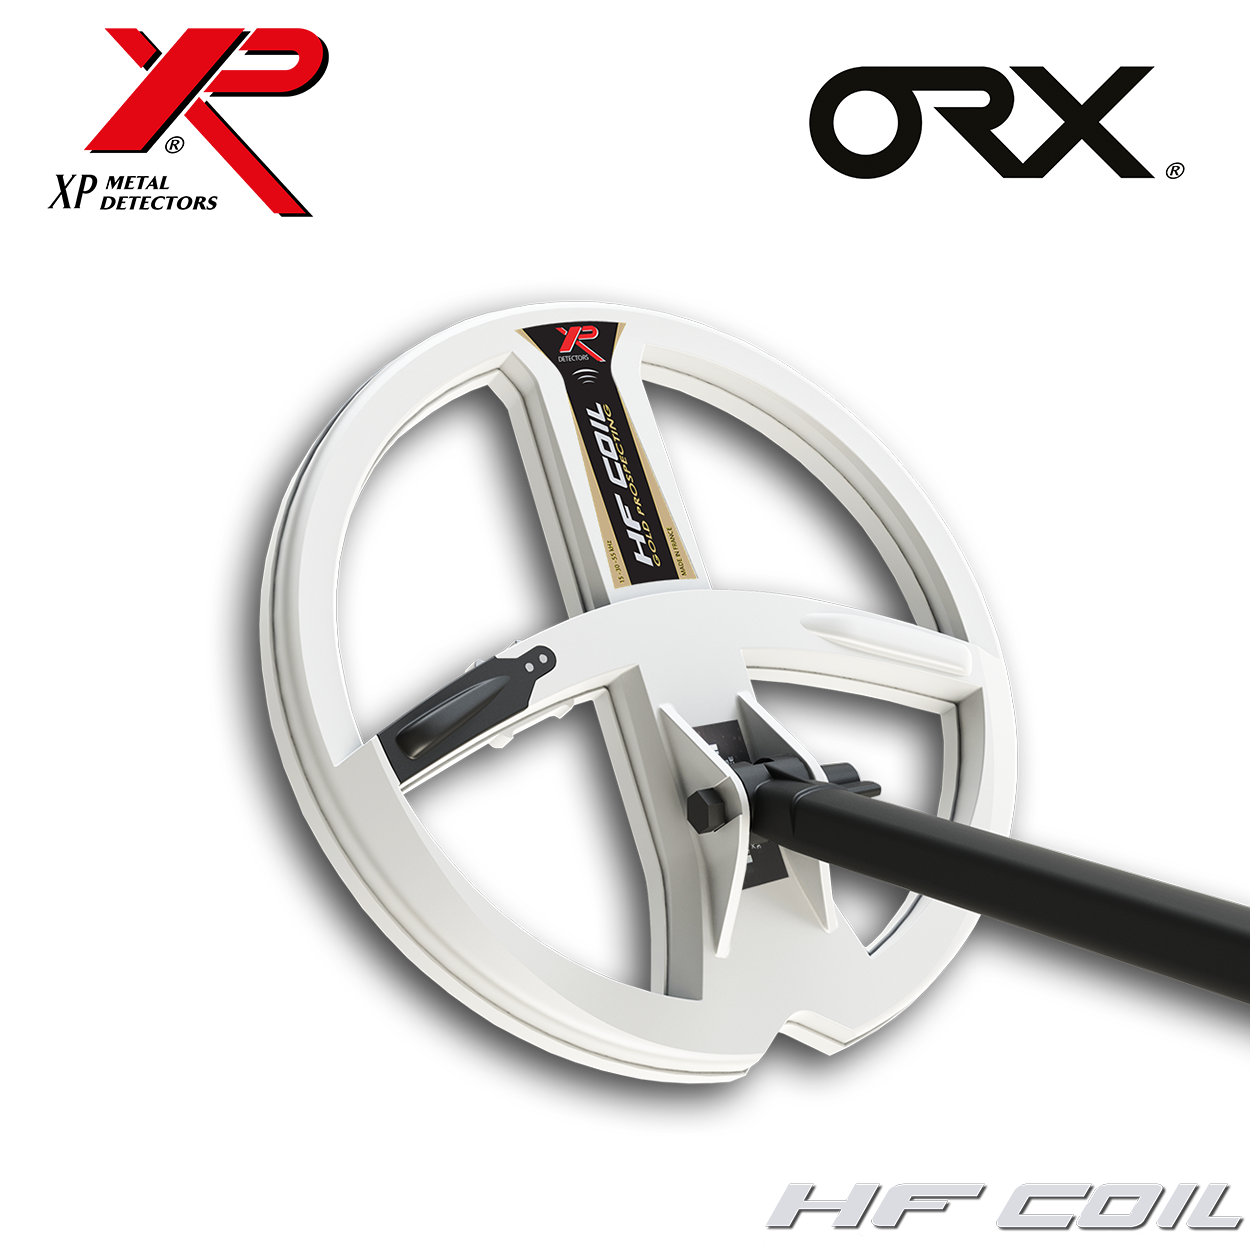 XP ORX Metalldetektor RC WSA 22 HF